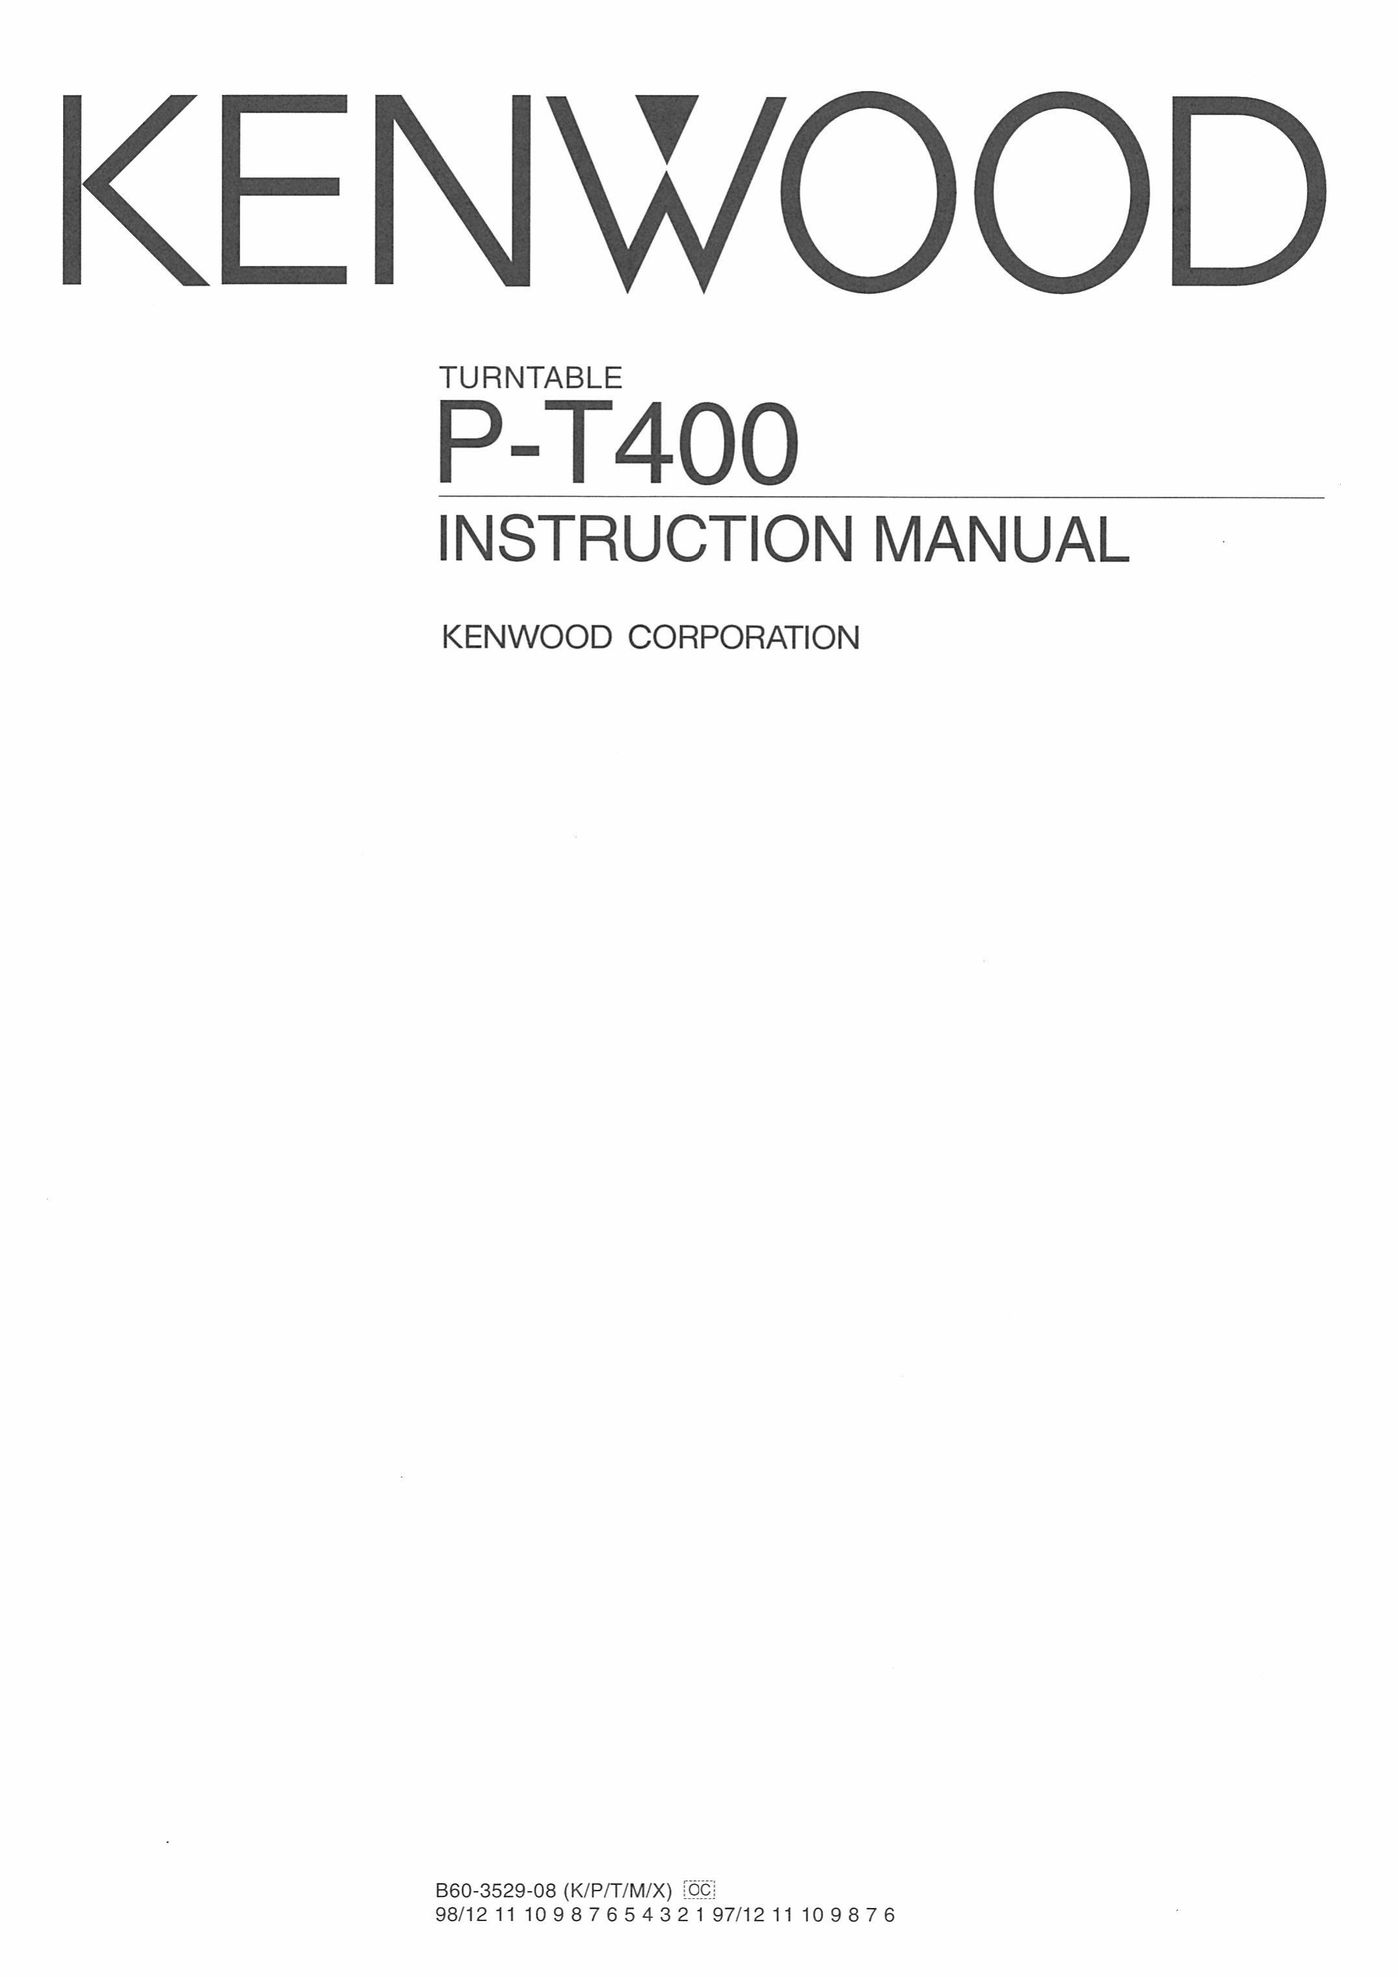 Kenwood P-T400 Turntable User Manual